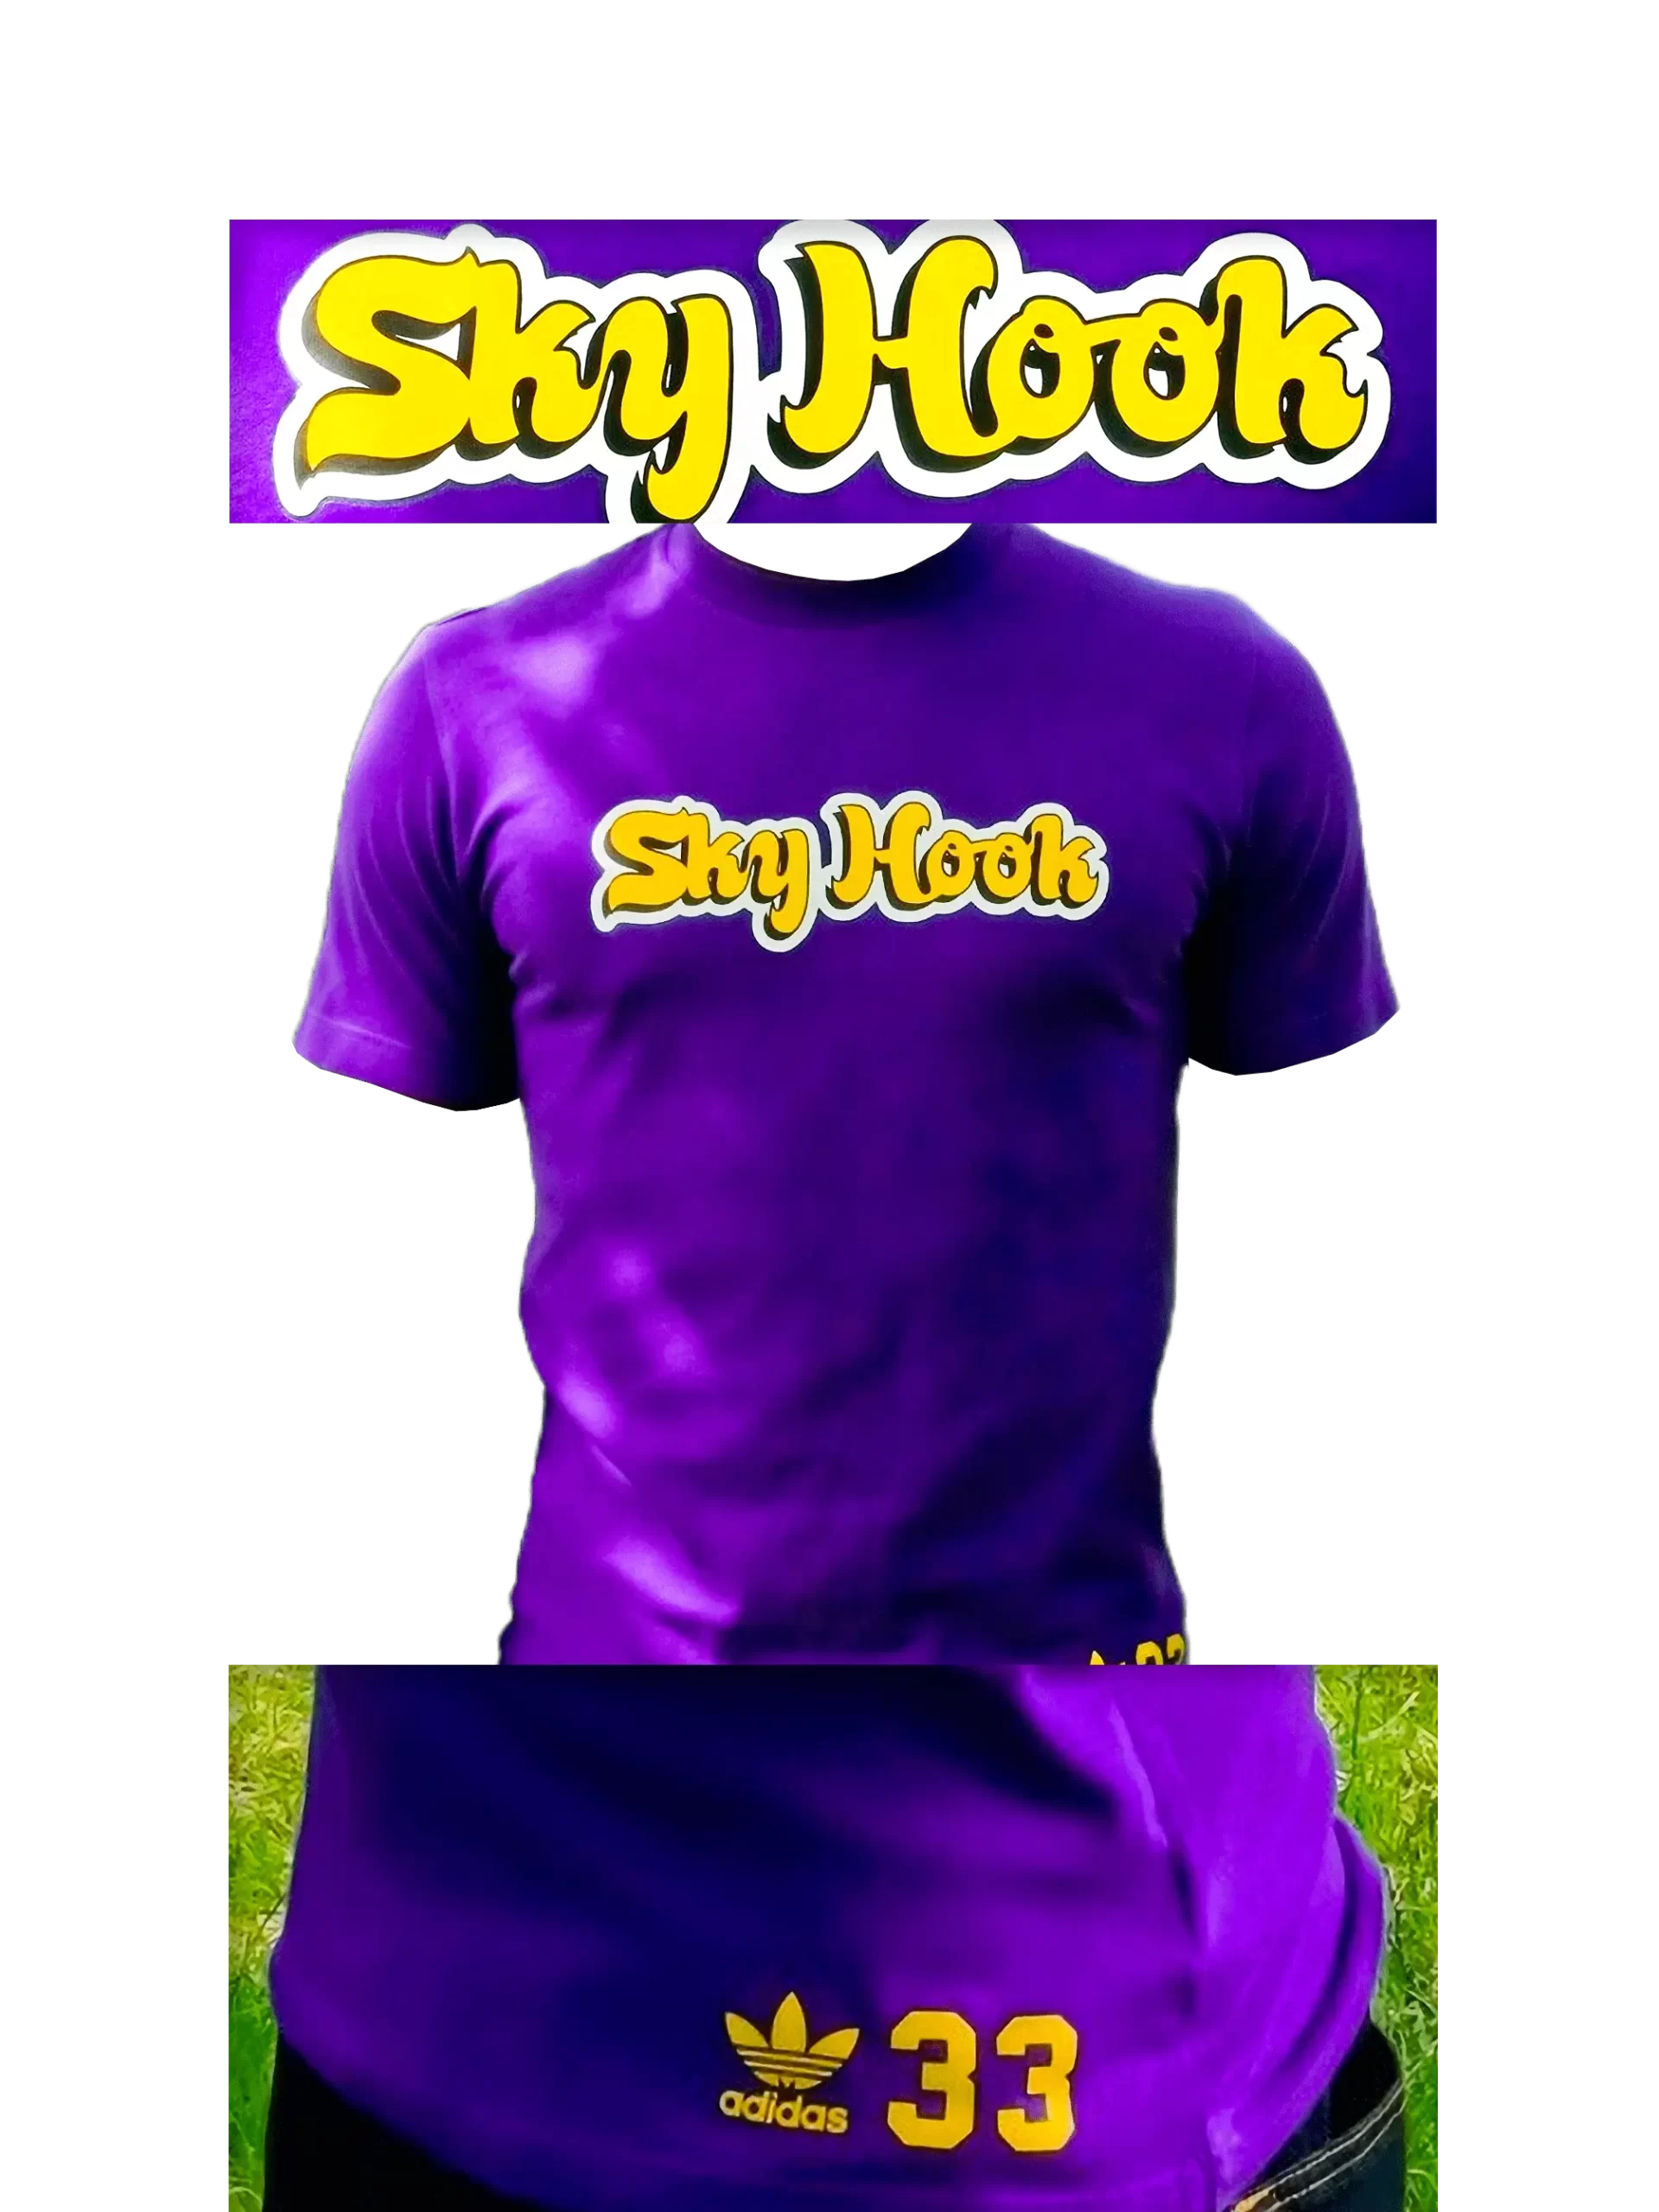 Men's 2004 SkyHook Lakers #33 T-Shirt by Adidas: Unburdened (EnLawded.com file #lmchk76165ip2y124826kg9st)